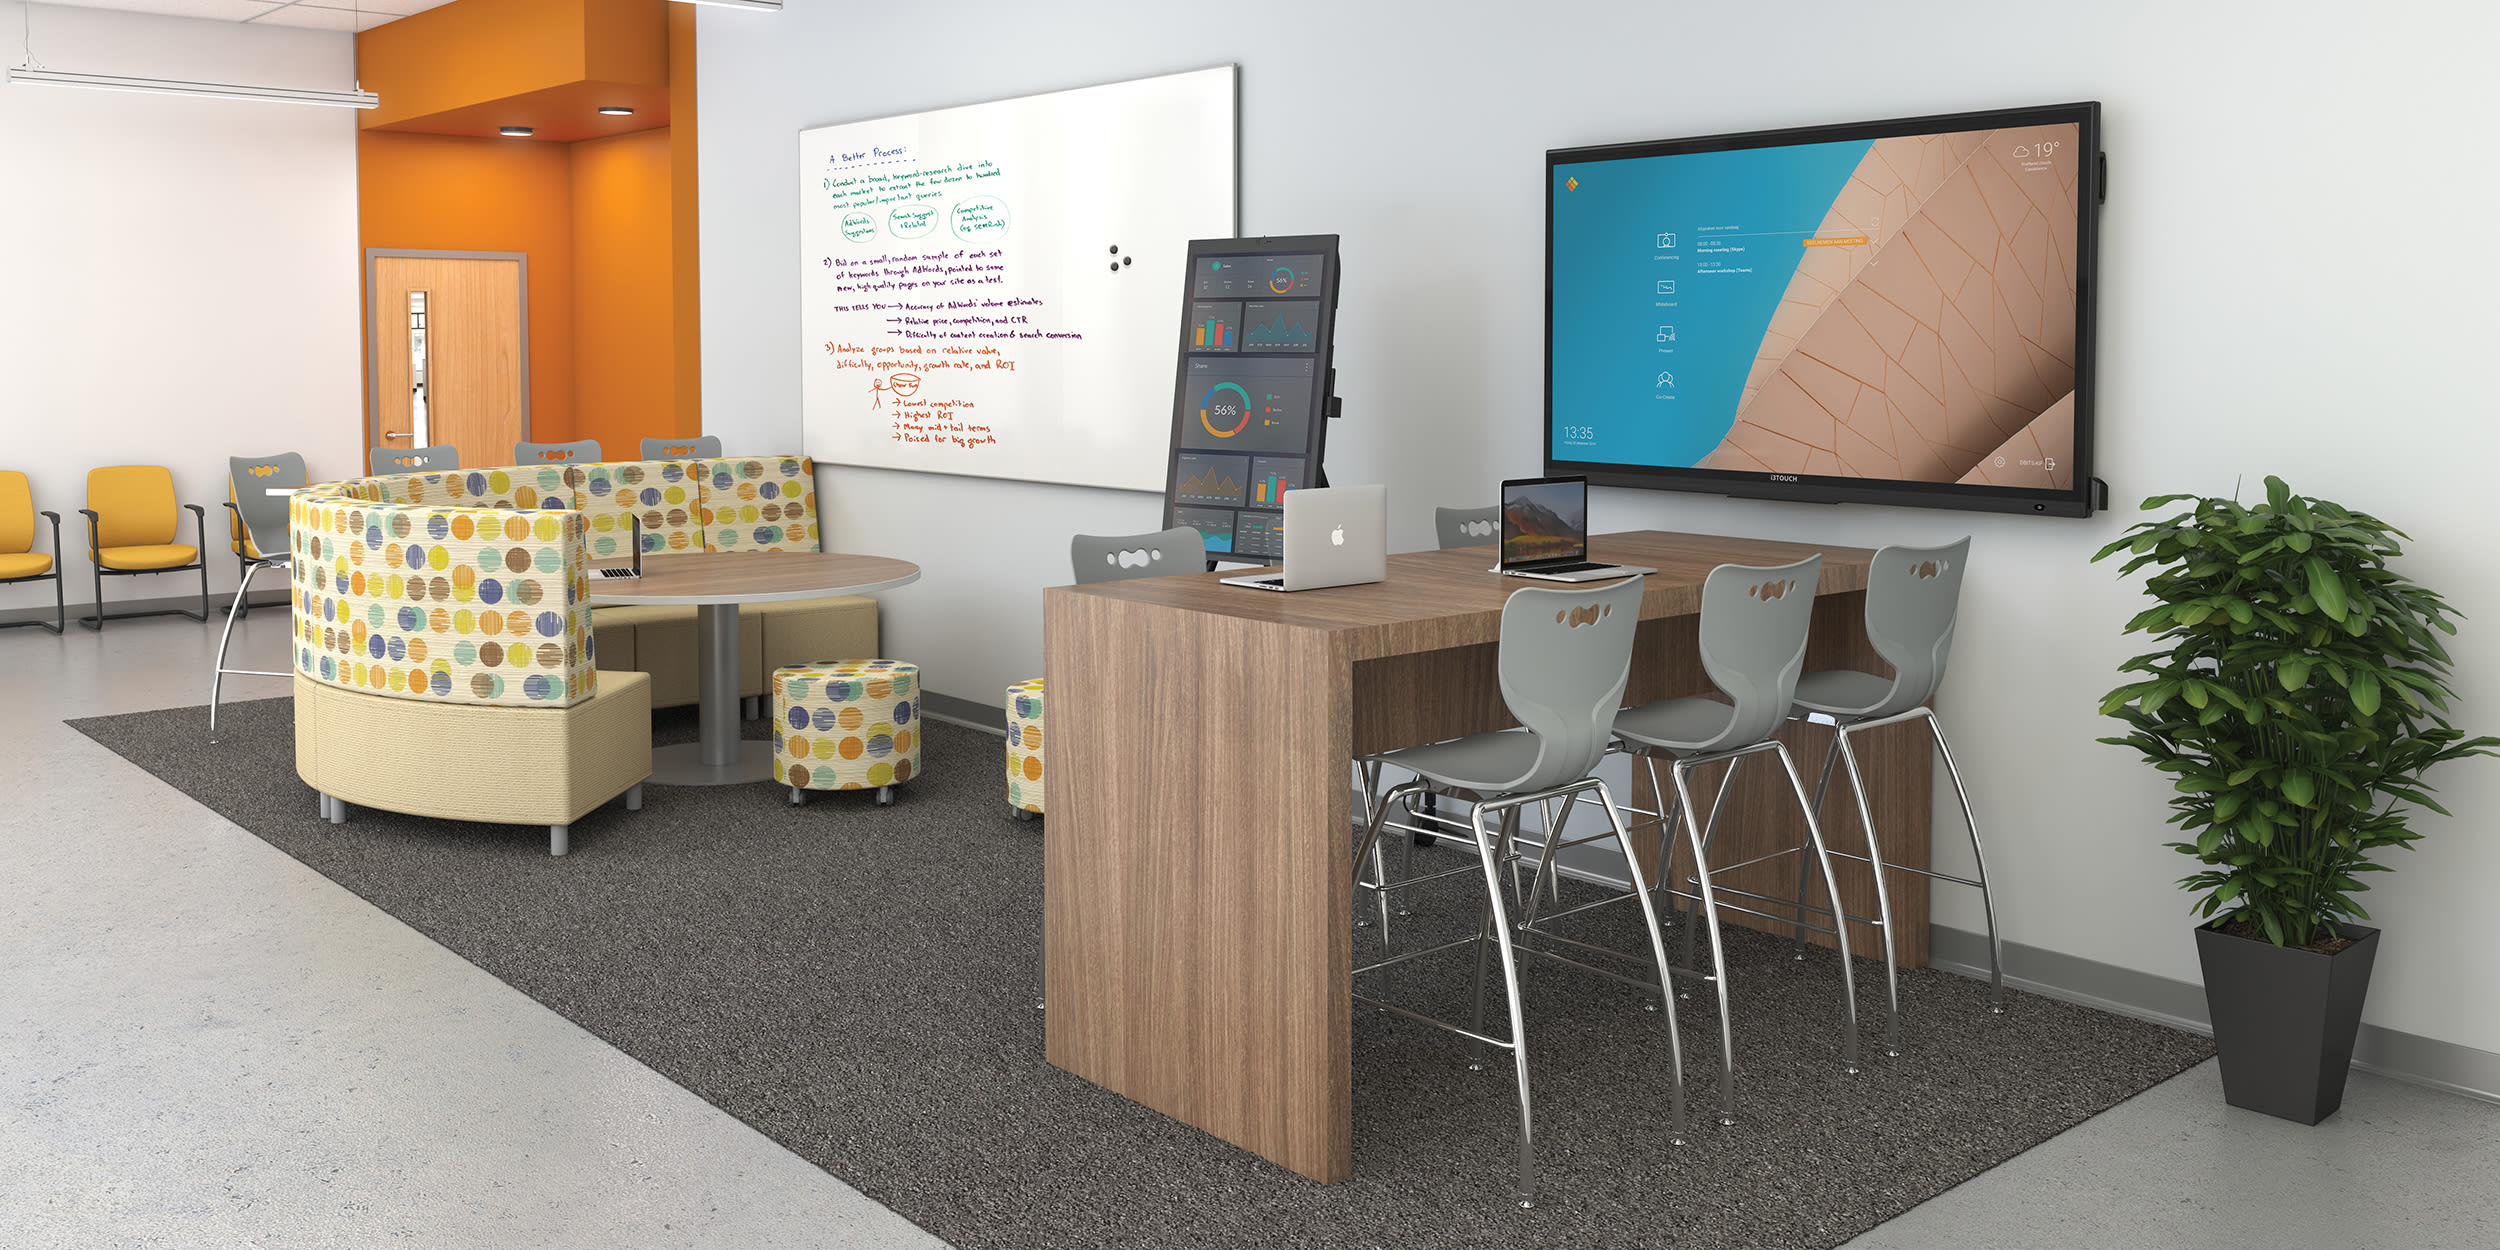 Flip Chart Stand Boards, Office & School Furniture - Orbit